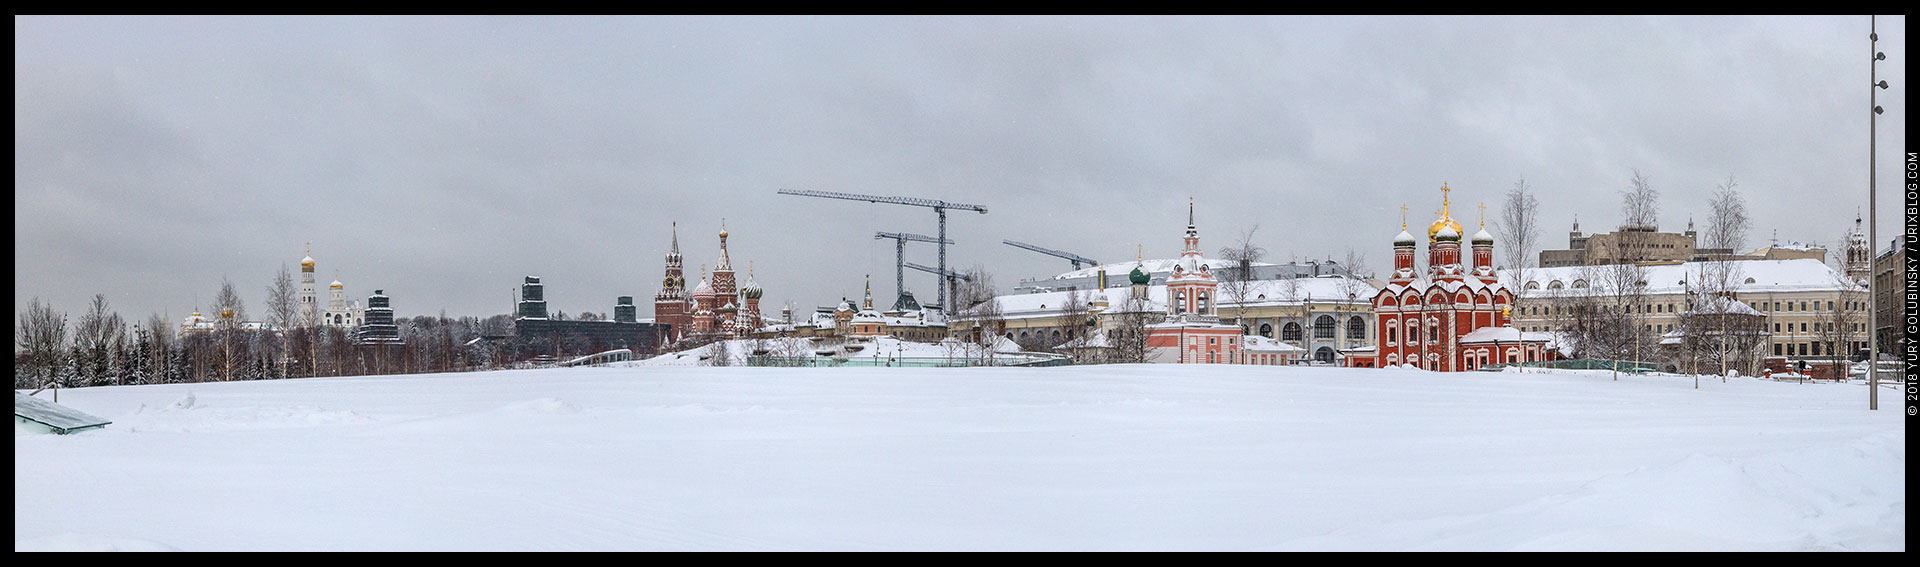 парк Зарядье, Москва, Россия, 2018, зима, снег, утро, безлюдно, панорама